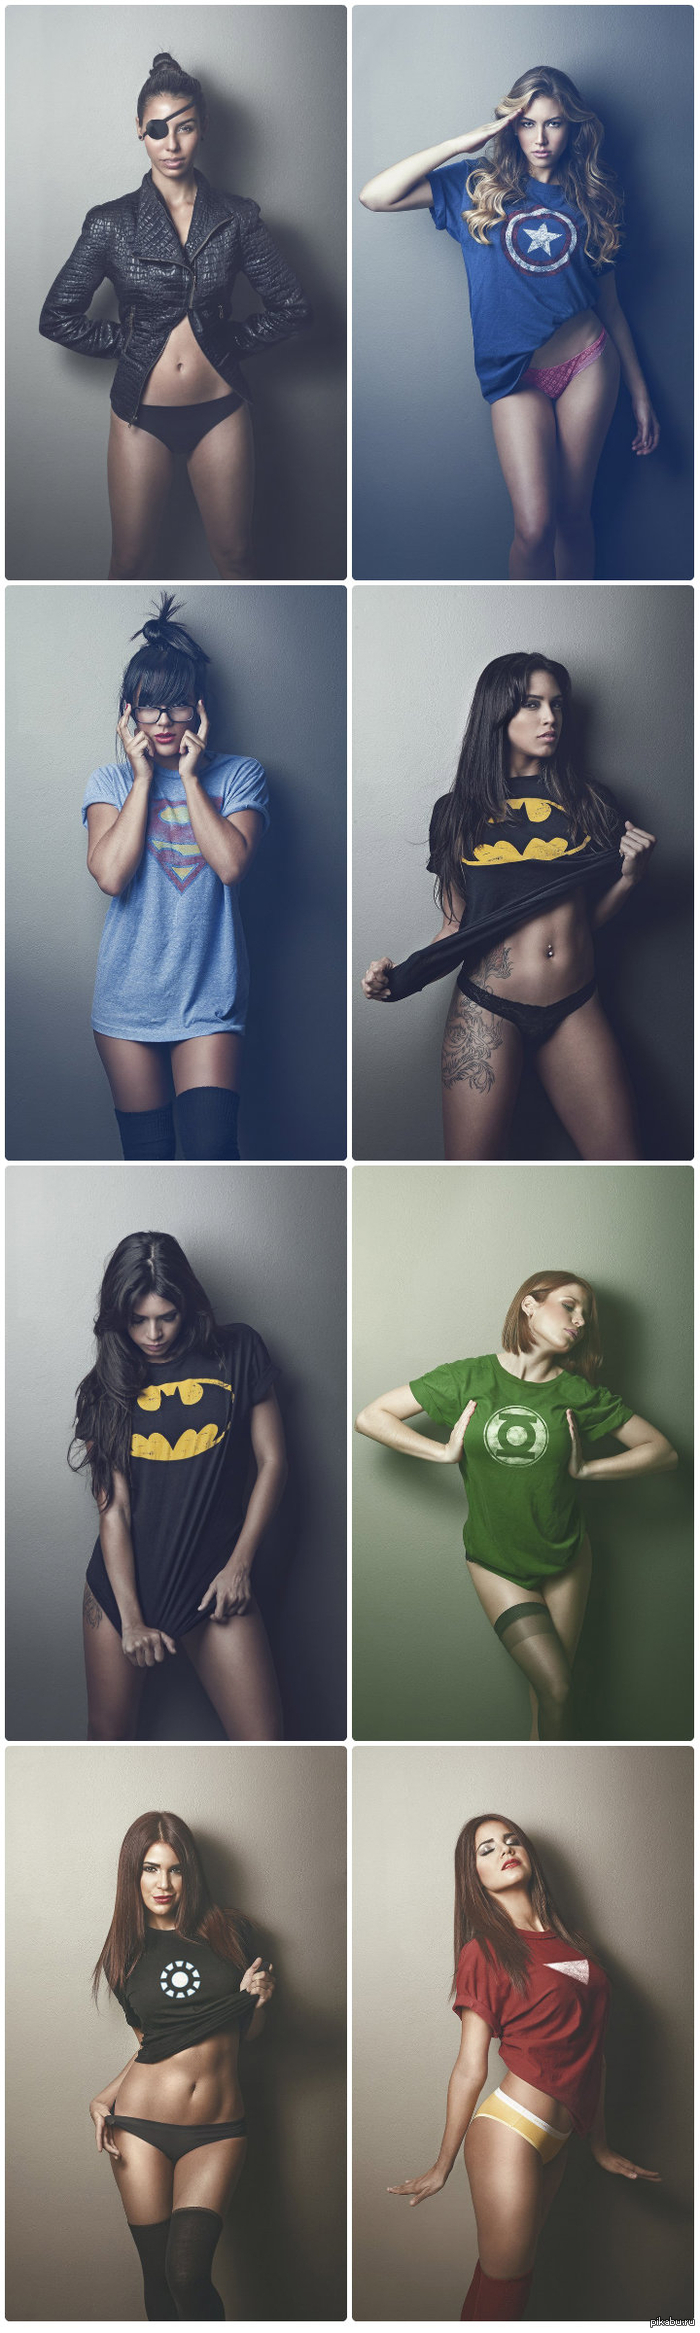 Heroine - NSFW, Superheroes, Girls, Sexuality, beauty, Cloth